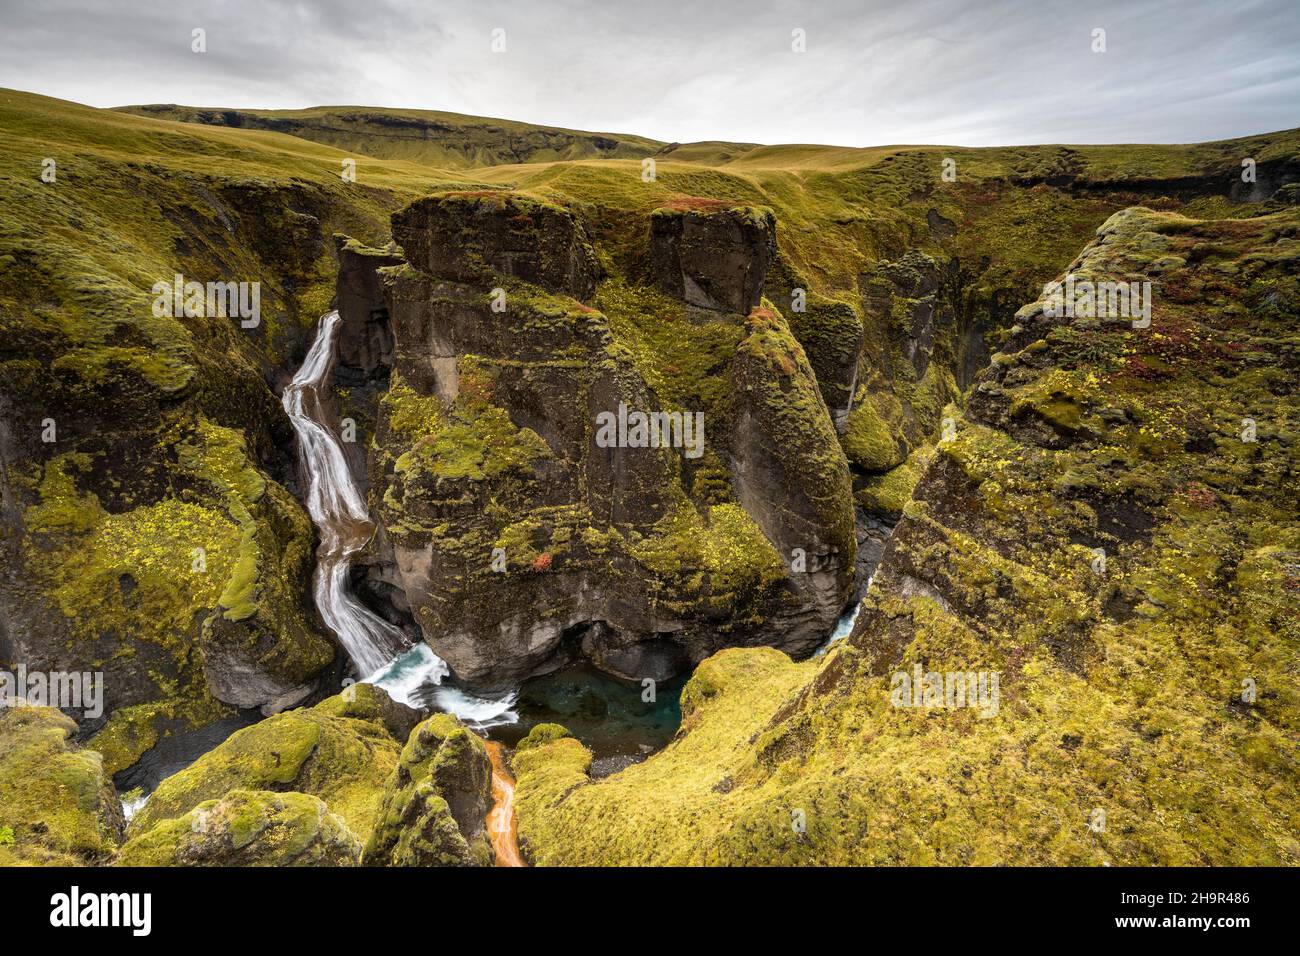 Fjäorargljufur Canyon, Fjädrargljufur, Wasserfall, tiefe Schlucht, in der Nähe von Kirkjubaejarklaustur, Südisland, Island Stockfoto